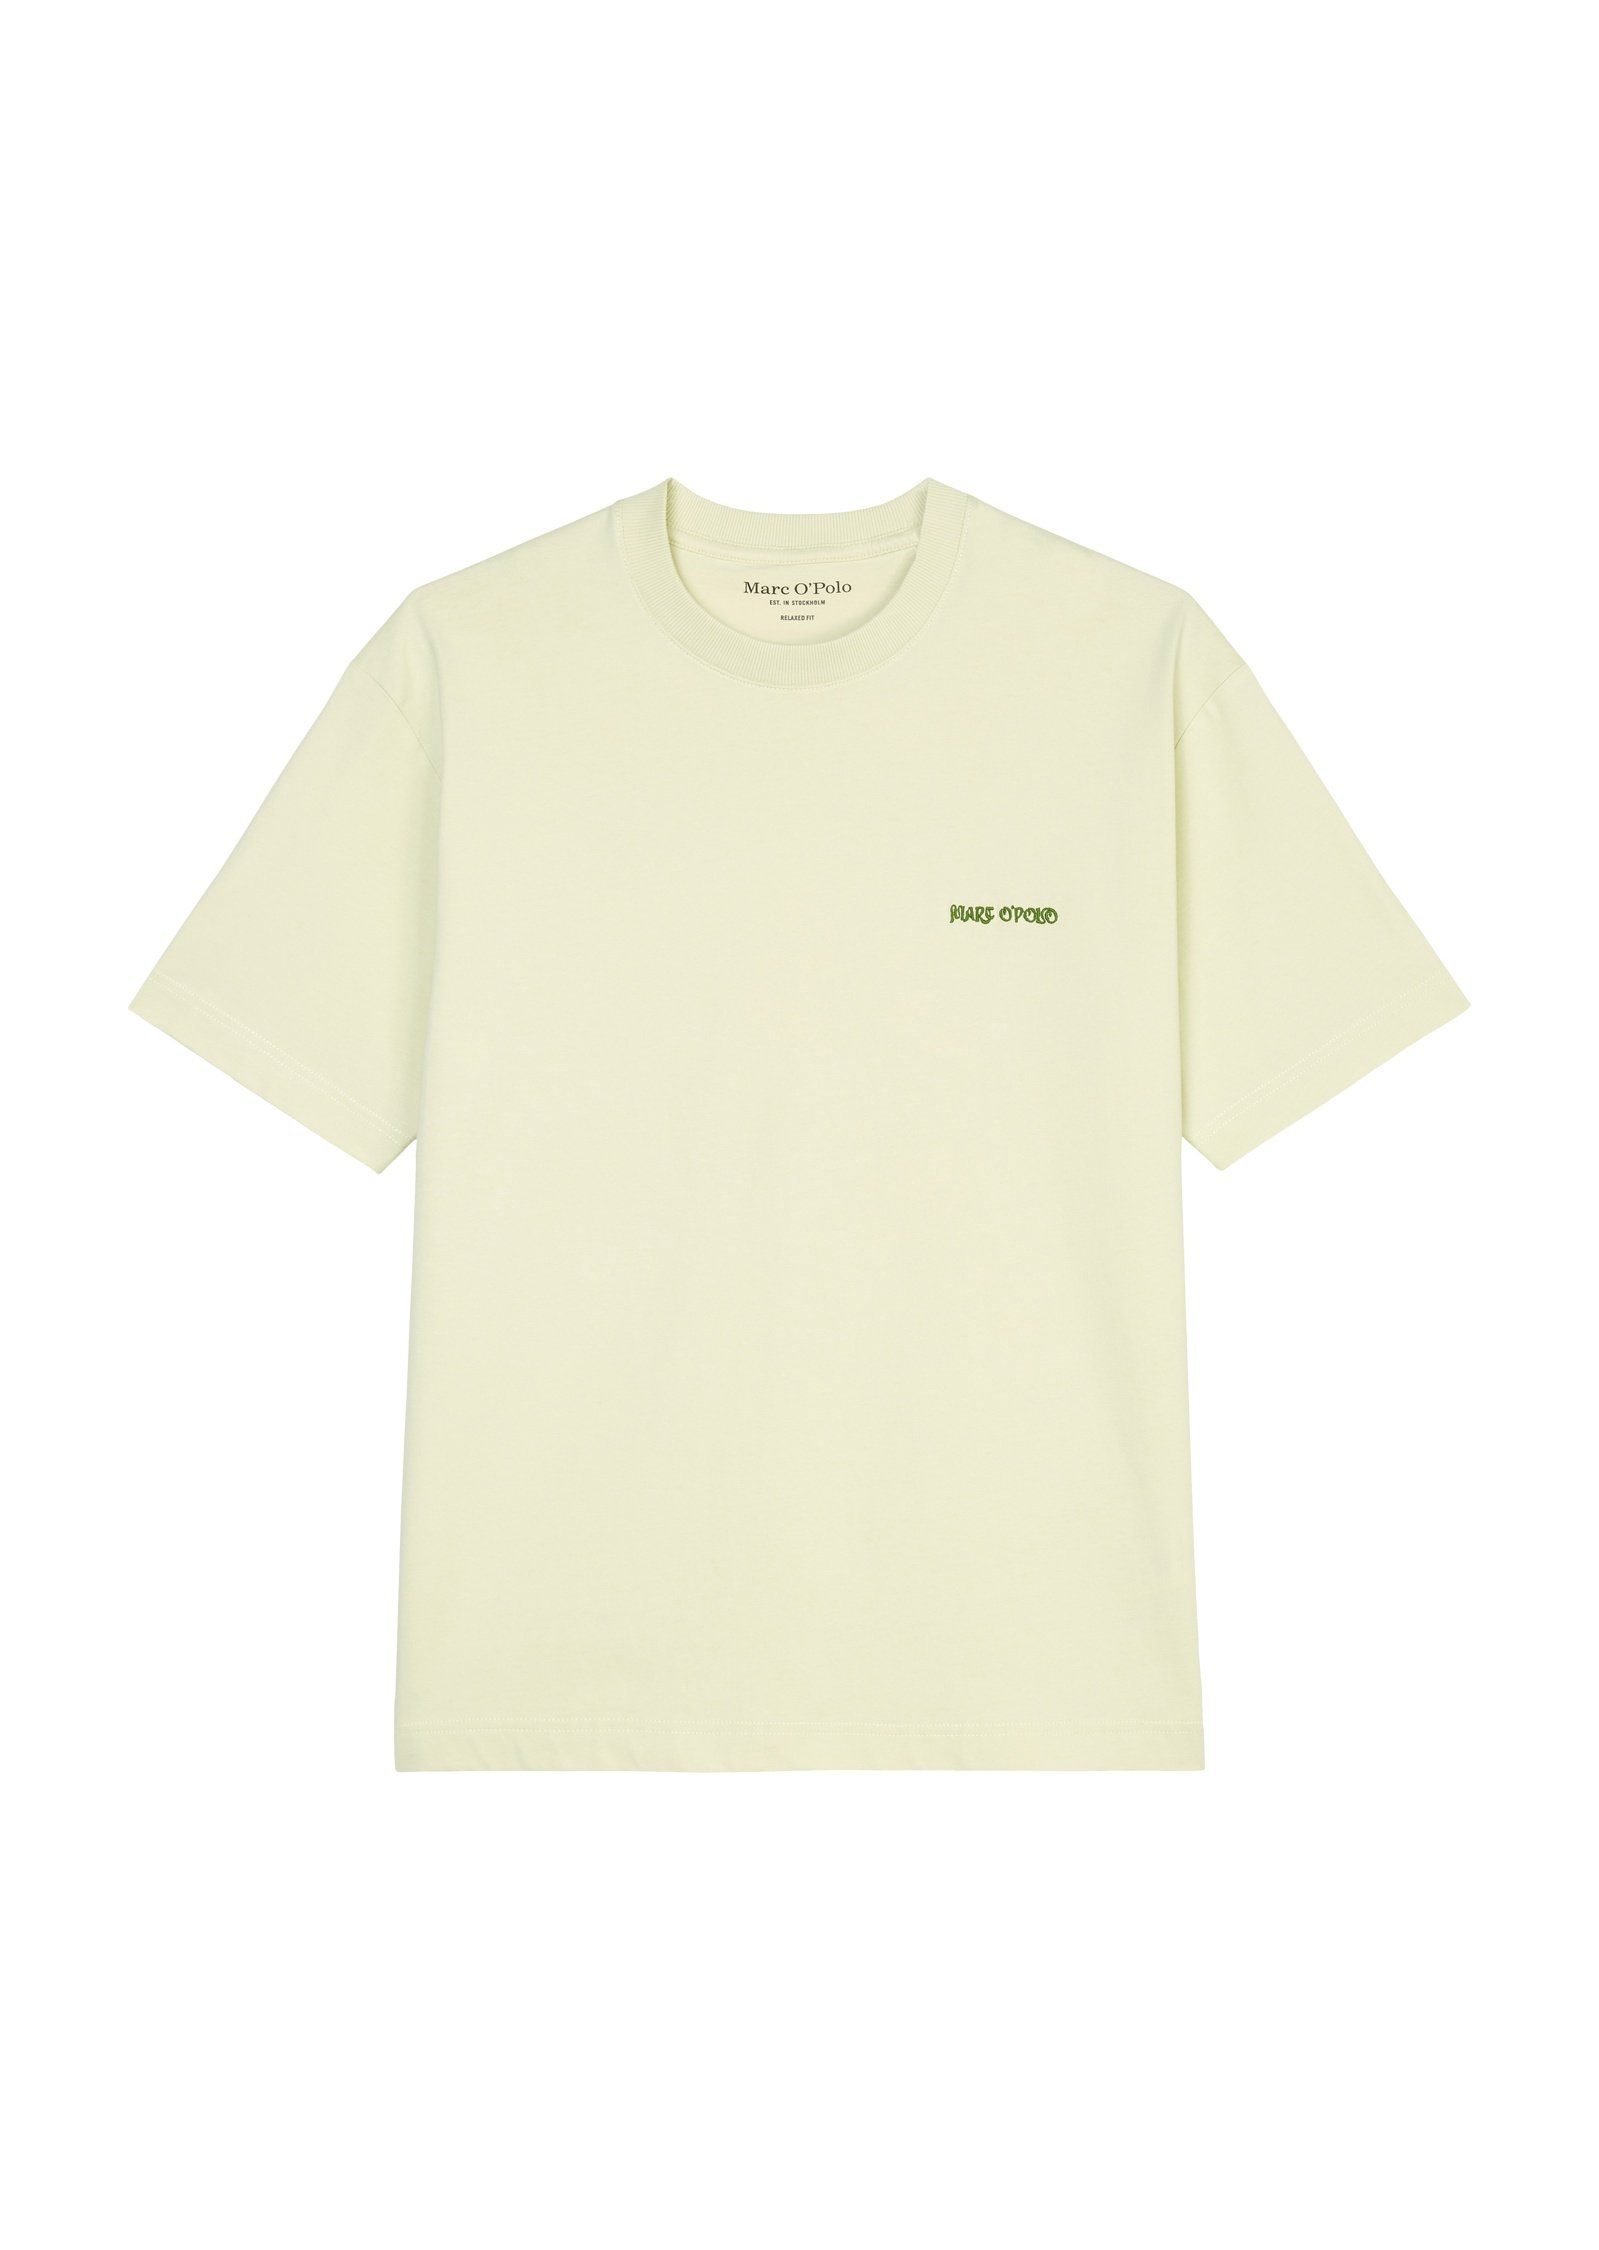 Marc hellgrün Rücken-Print O'Polo T-Shirt mit